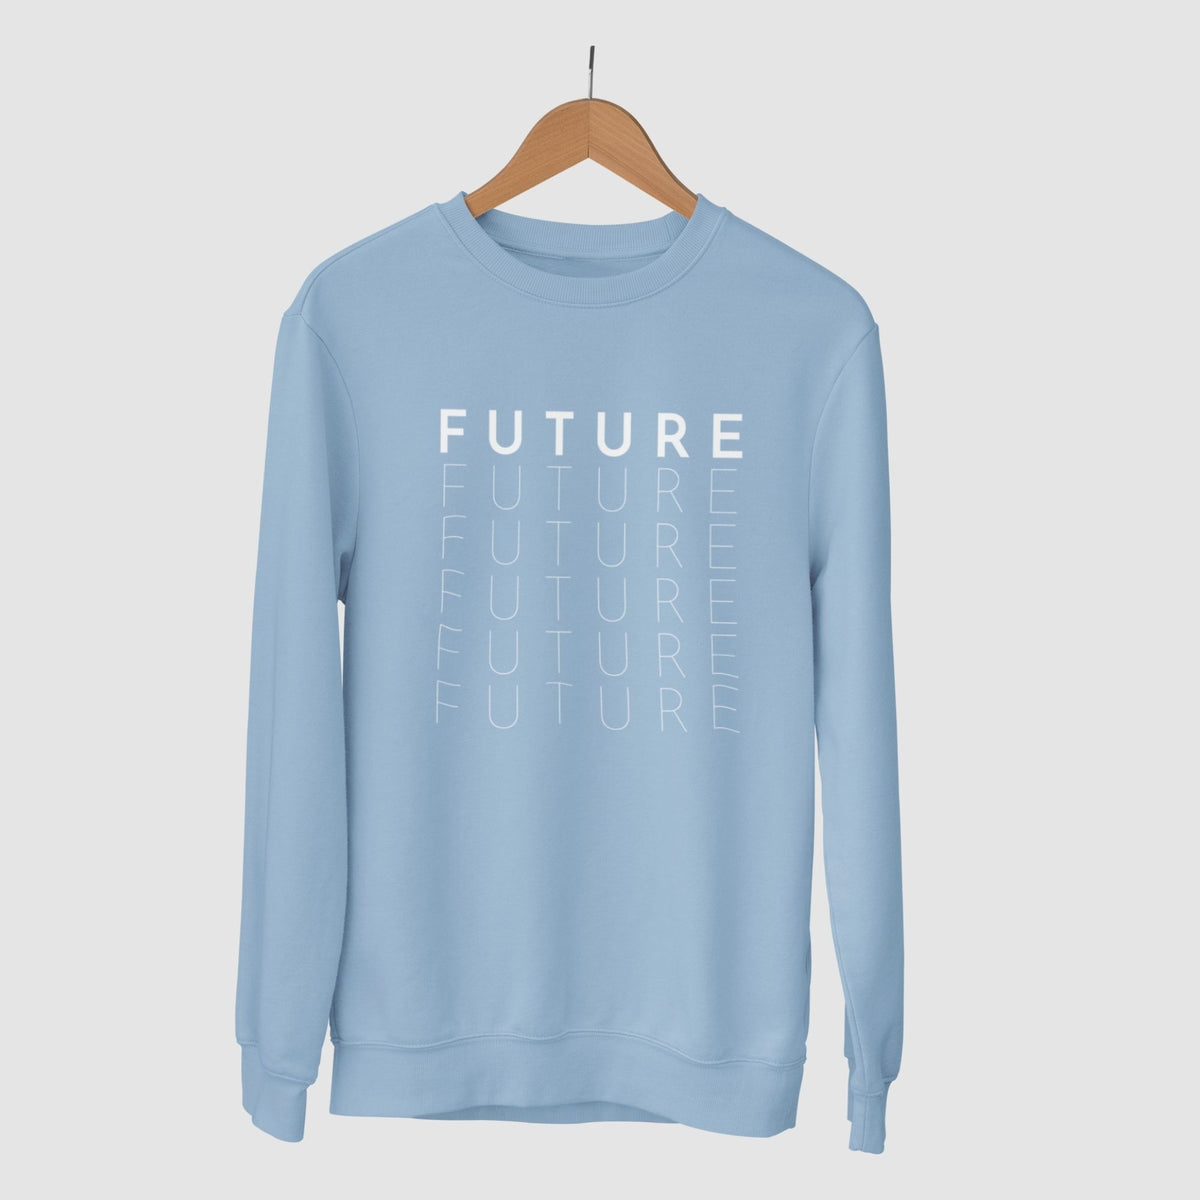 future-cotton-printed-unisex-light-blue-sweatshirt-gogirgit-com